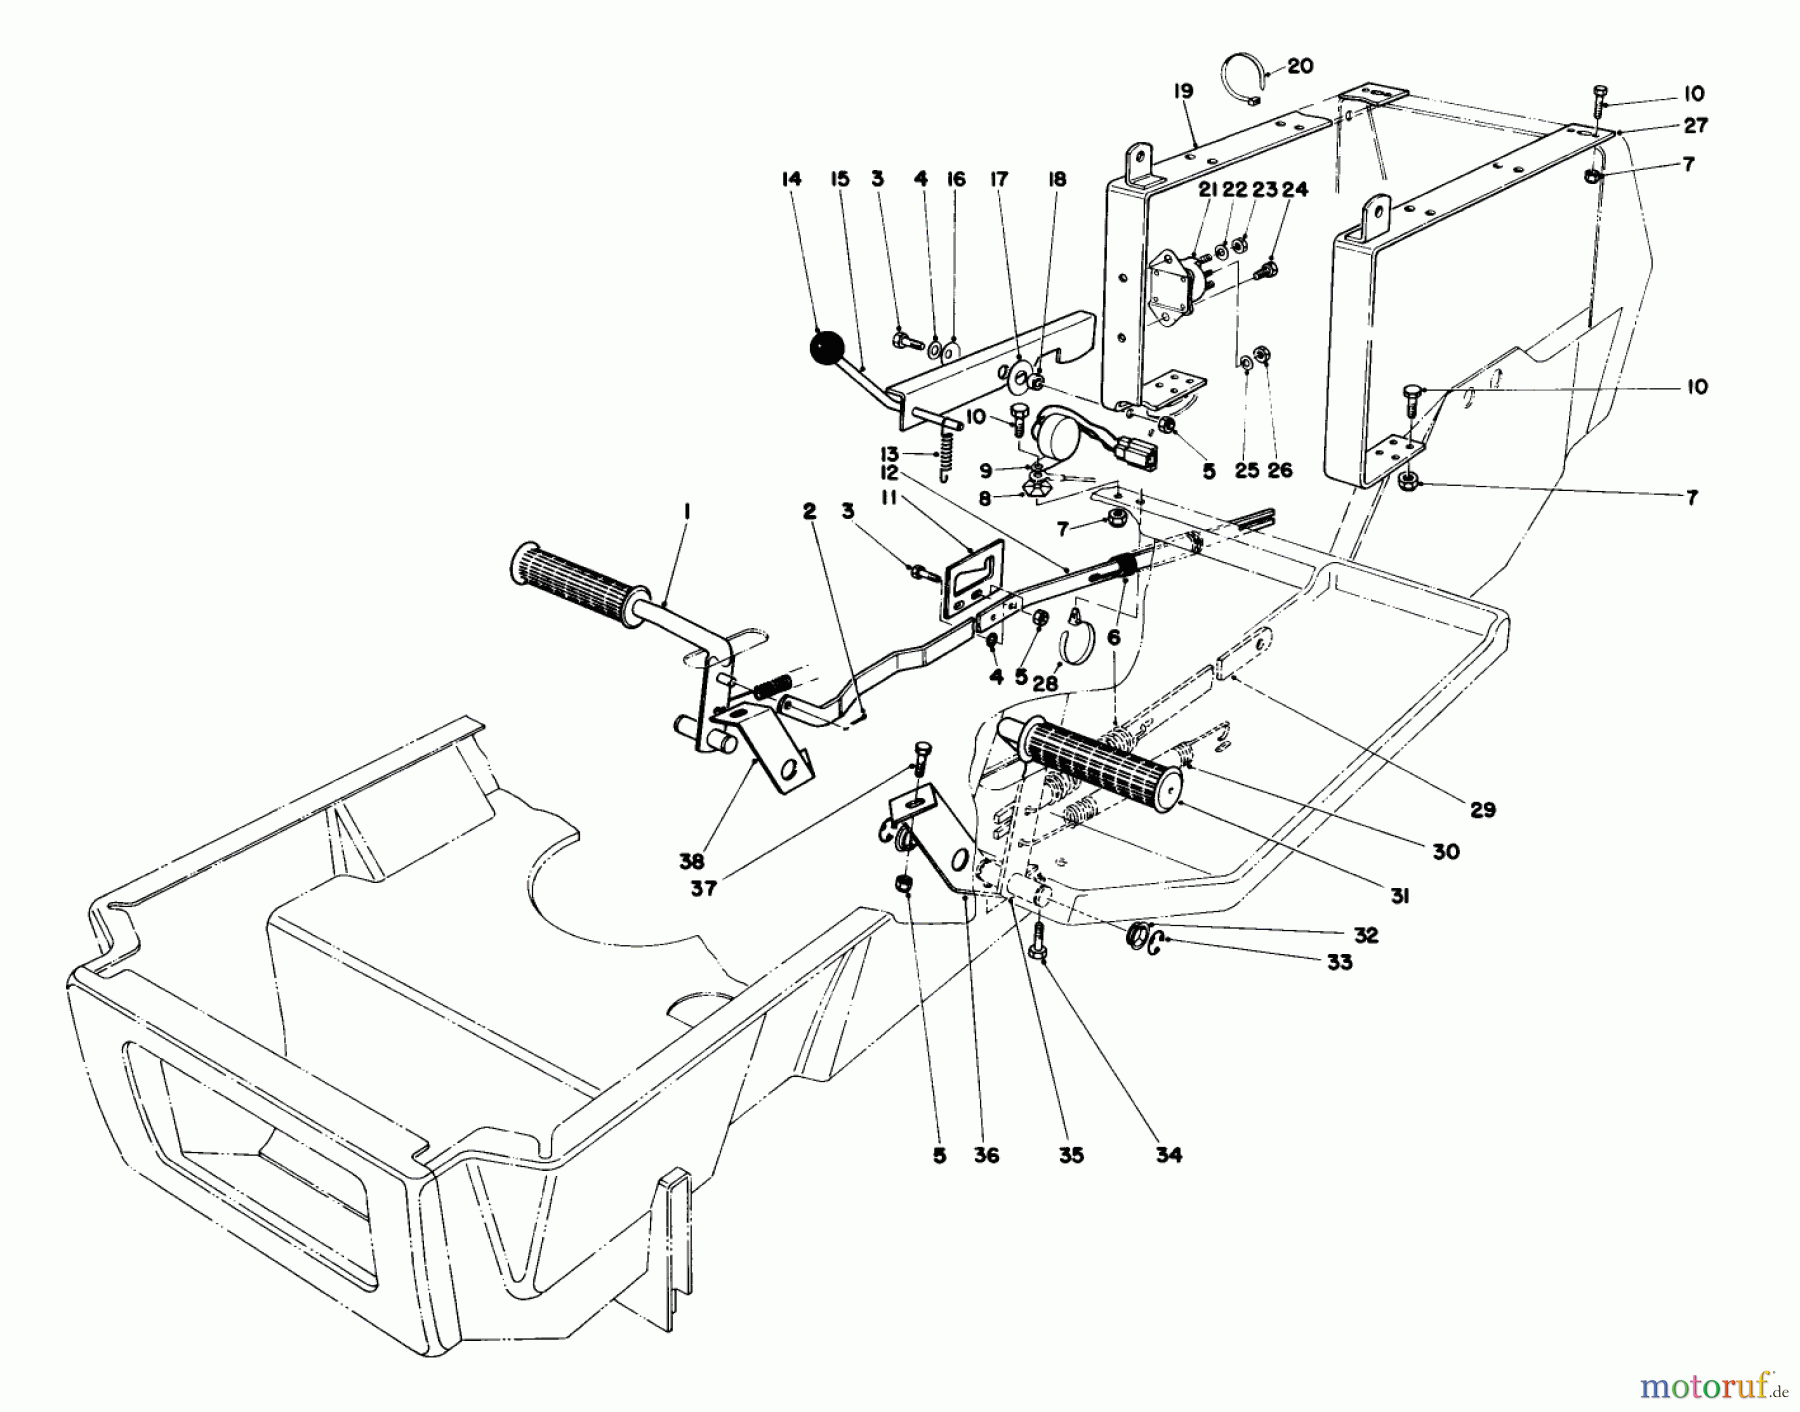  Toro Neu Mowers, Lawn & Garden Tractor Seite 1 57300 (8-32) - Toro 8-32 Front Engine Rider, 1985 (5000001-5999999) BRAKE & CLUTCH PEDAL ASSEMBLY